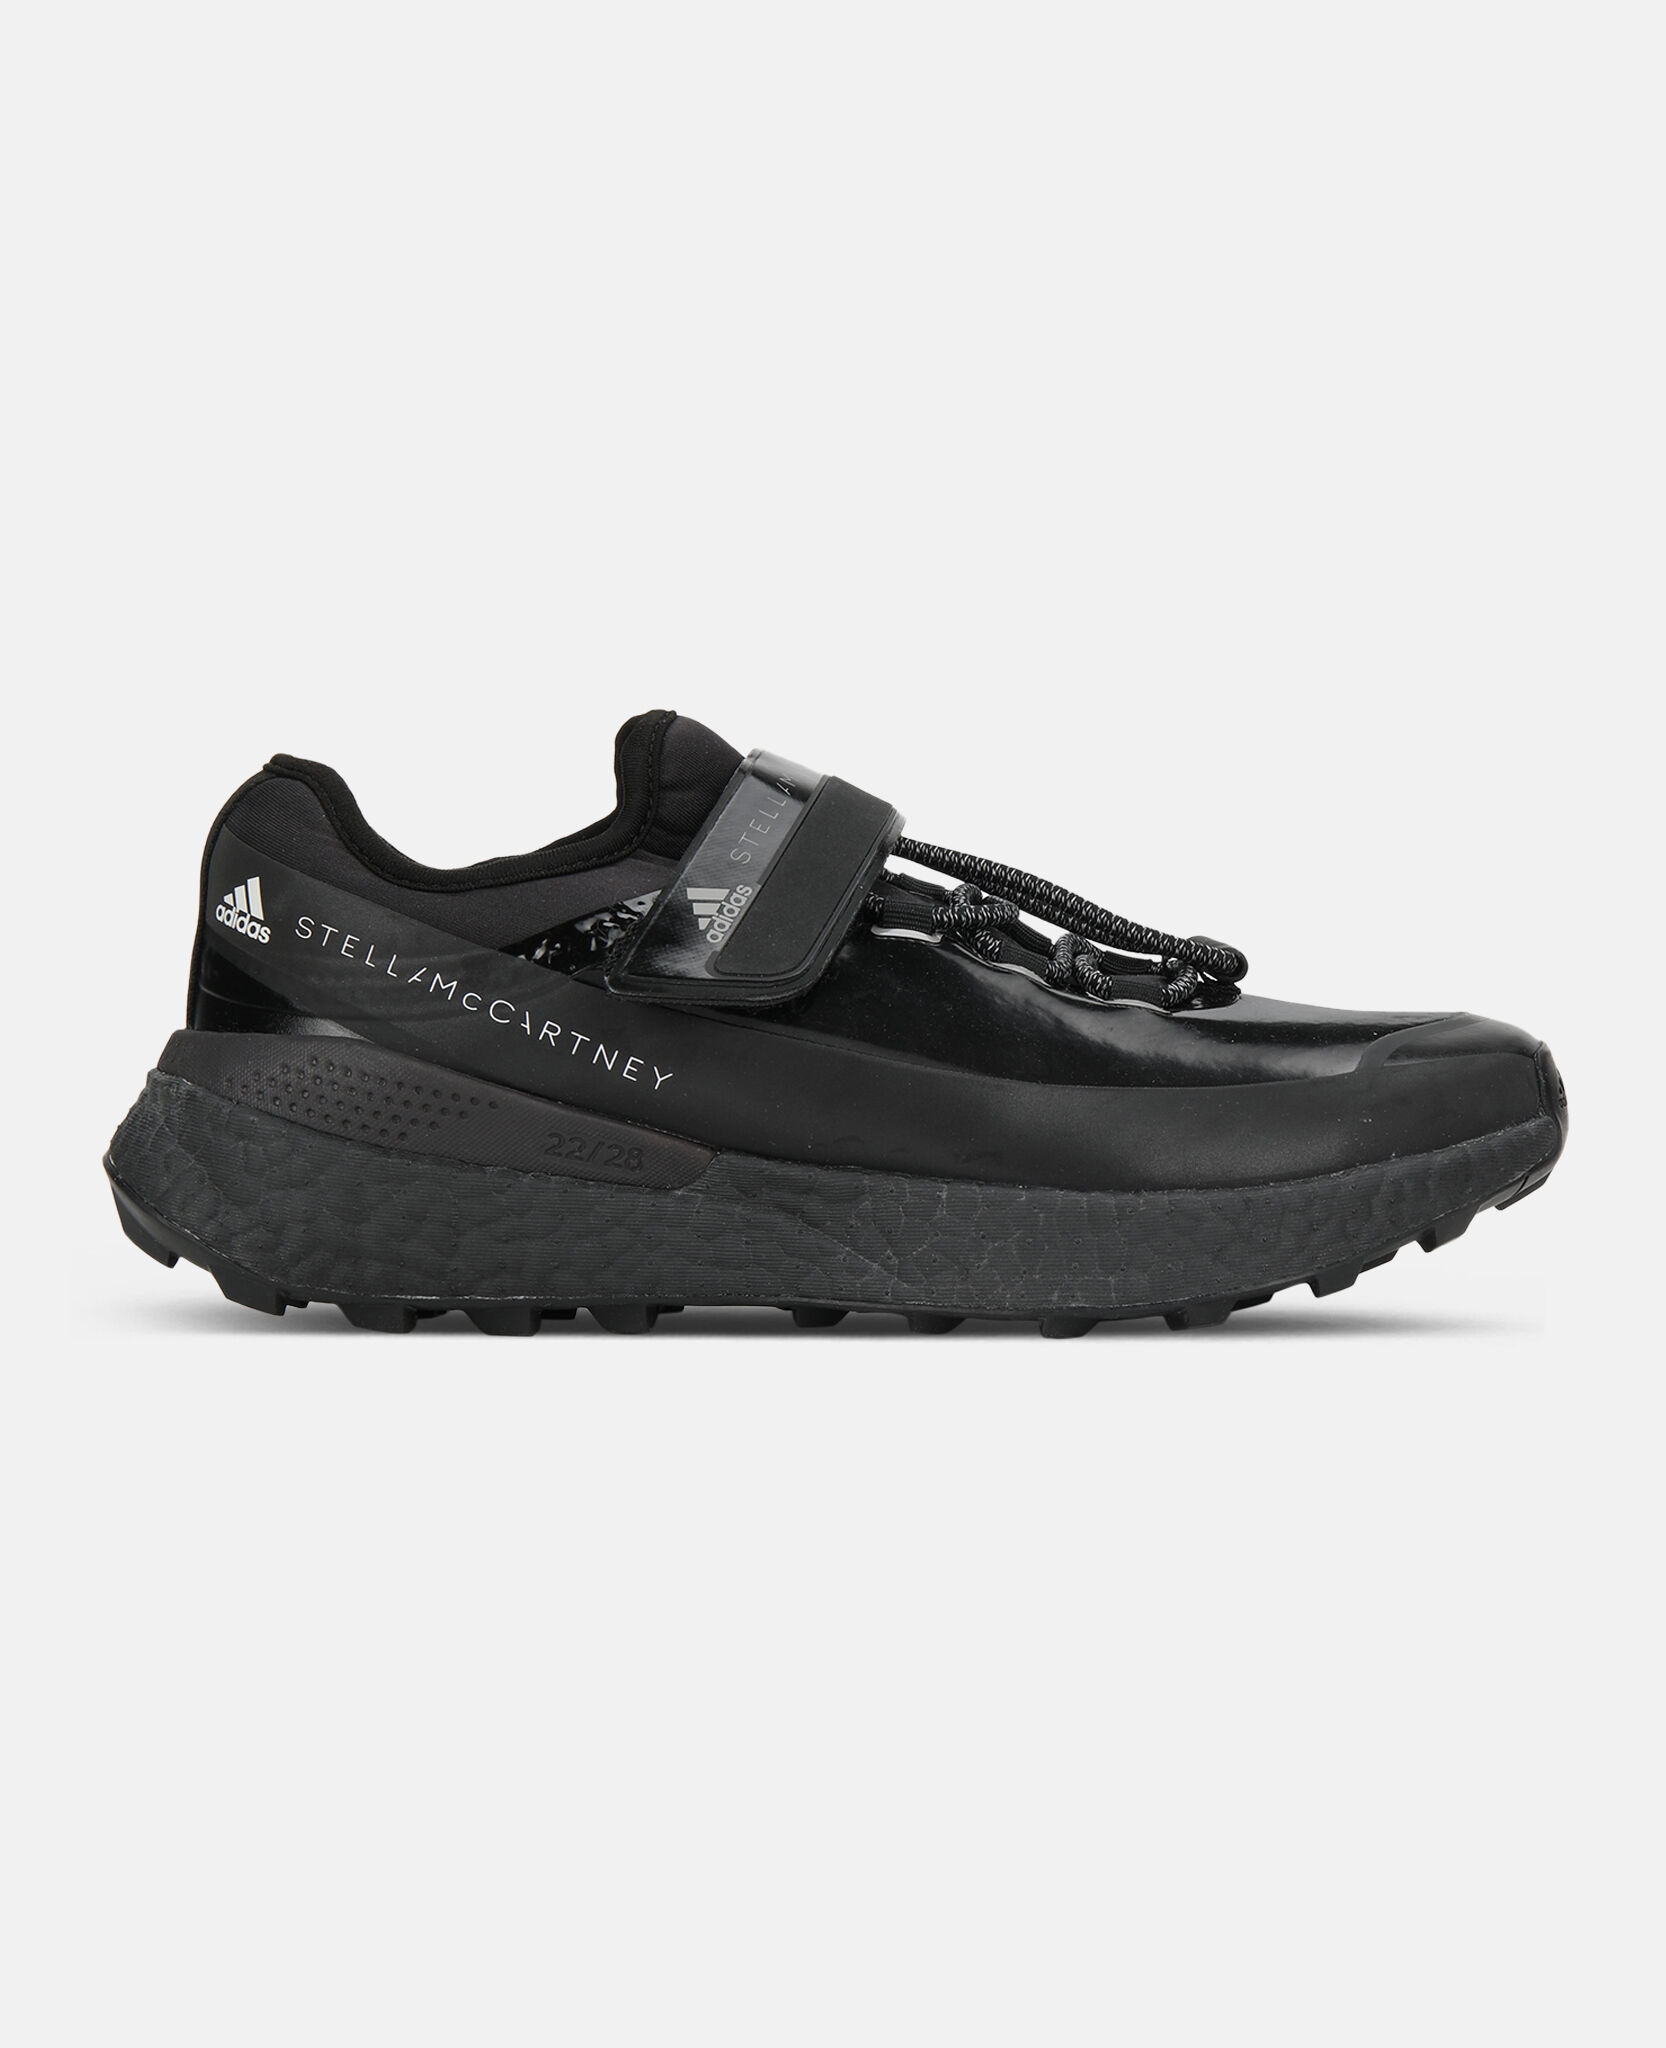 Adidas X Stella McCartney Outdoor Boost Black Running Shoes